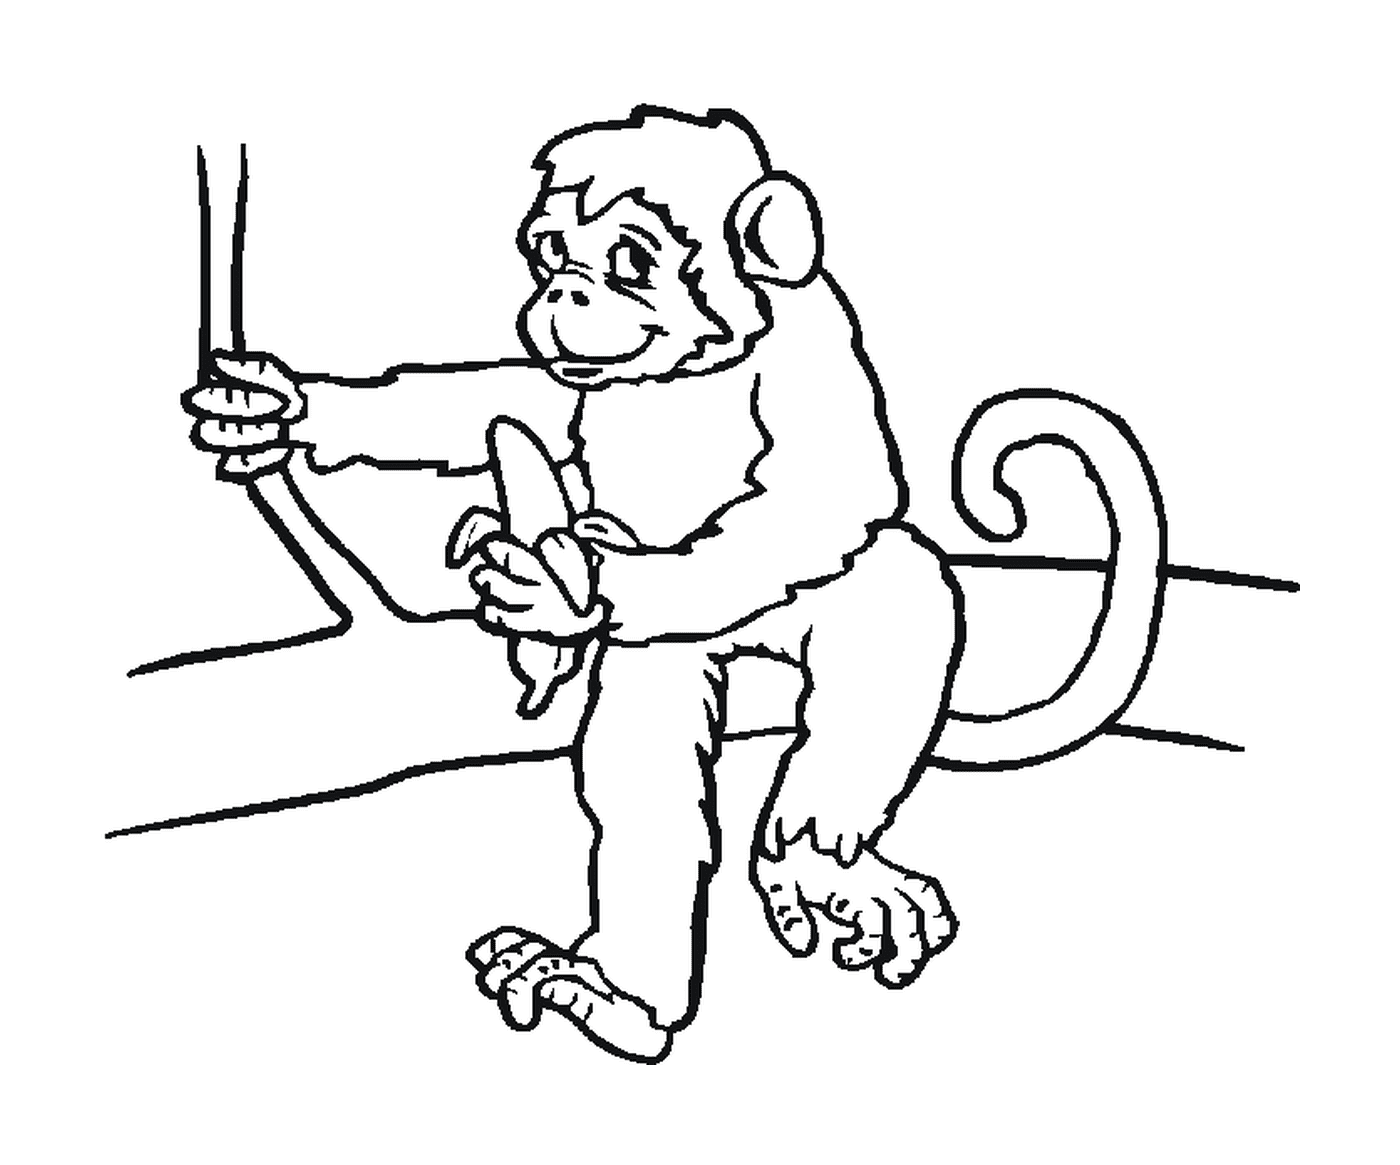  Monkey sitting with a banana 